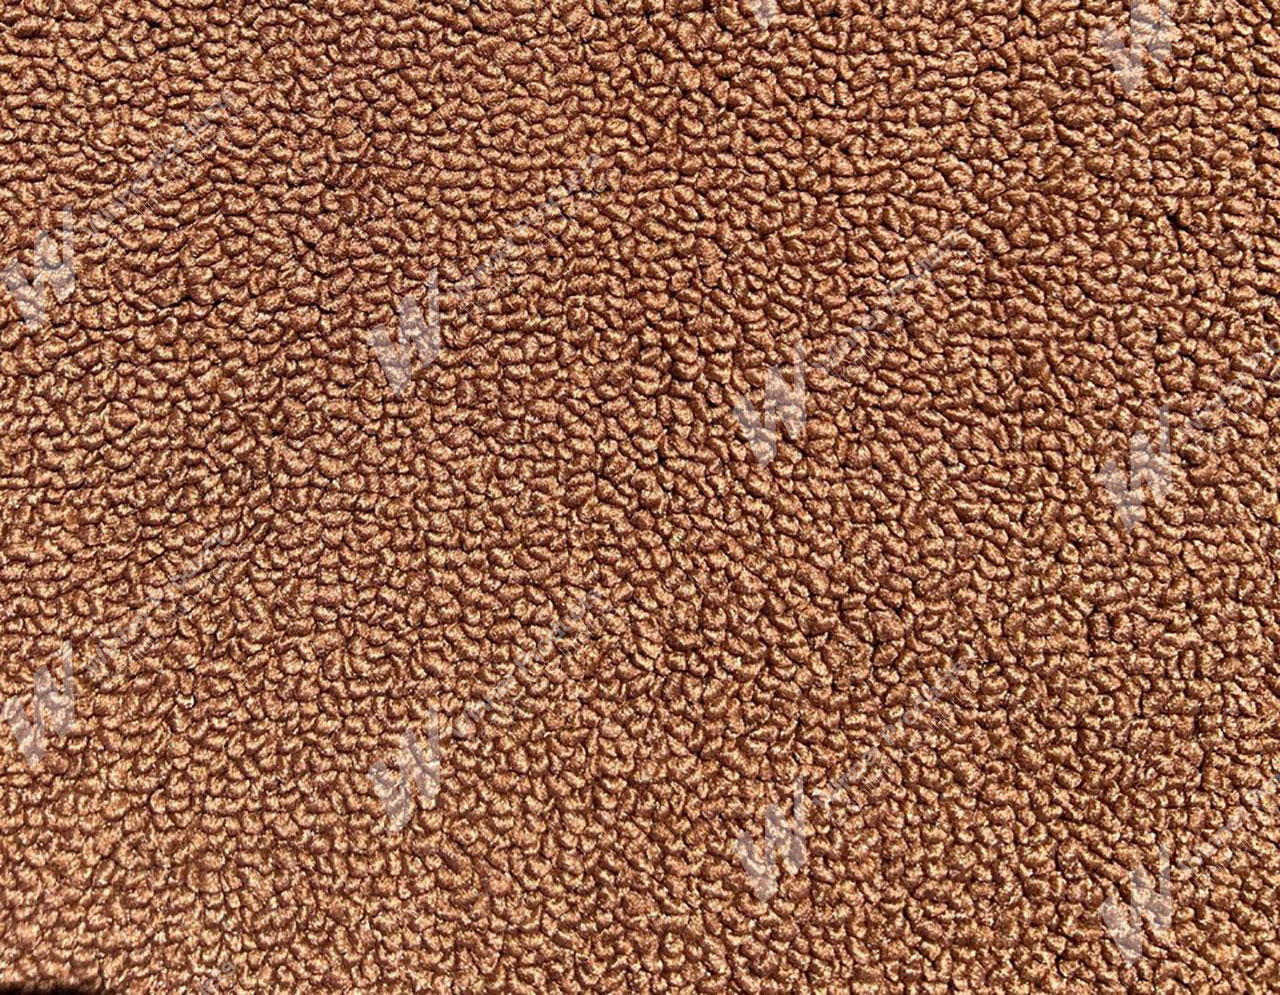 Holden Kingswood HJ Kingswood Panel Van 66V Chestnut Carpet (Image 1 of 1)